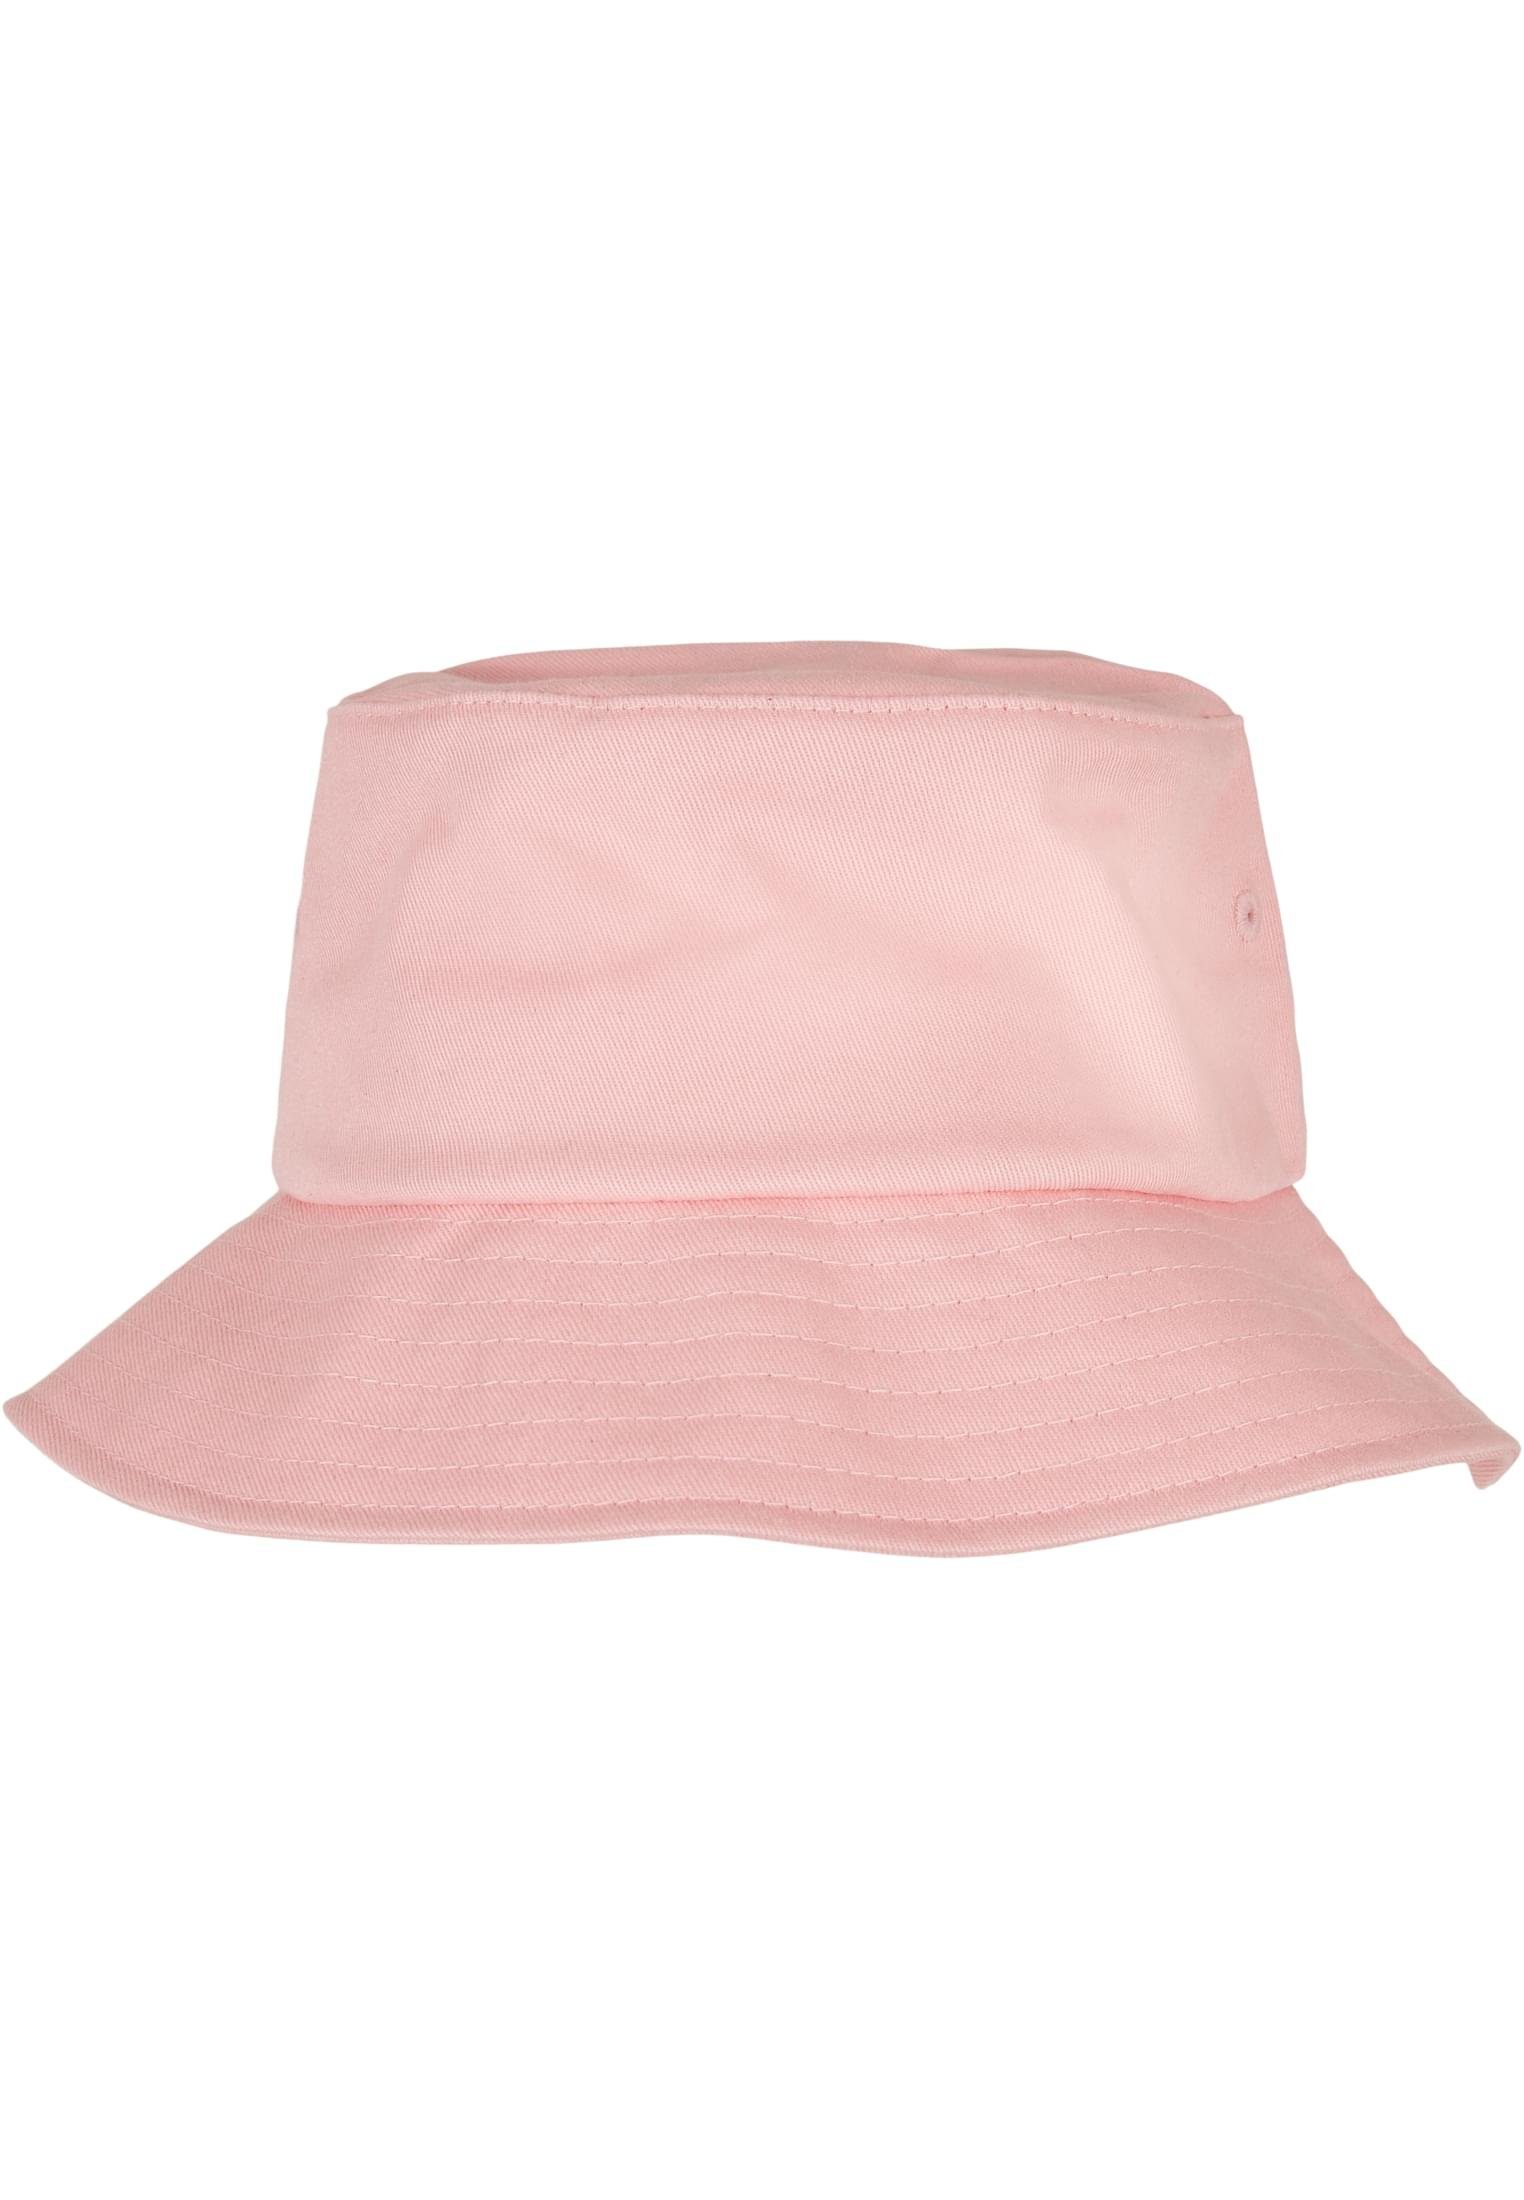 Flexfit Flex Cap Accessoires Flexfit lightpink Cotton Twill Hat Bucket